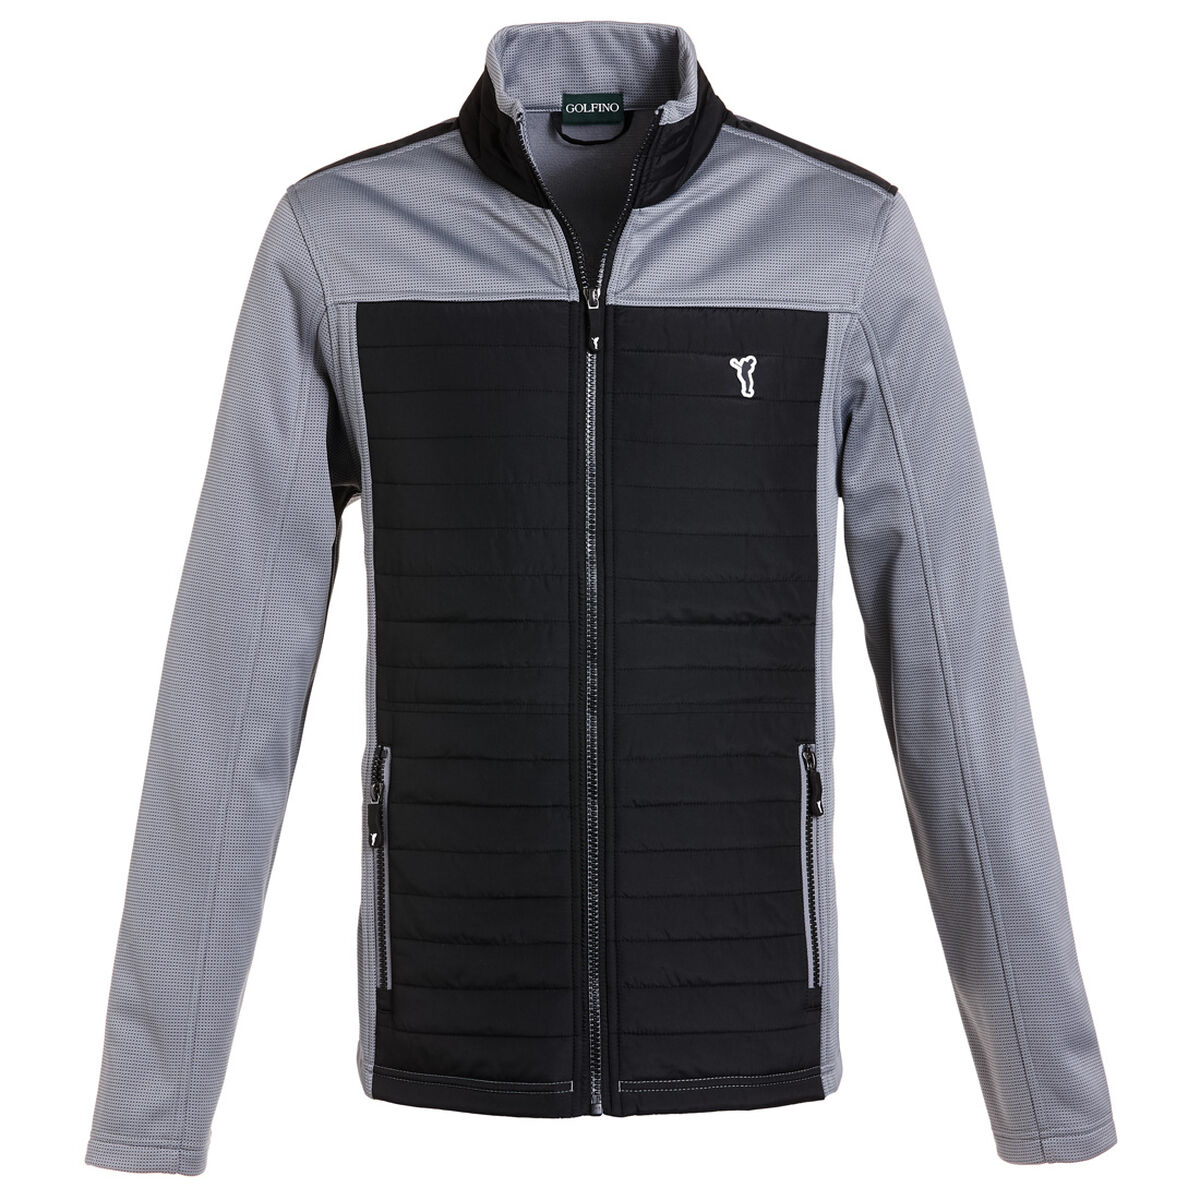 Vêtement intermédiaire GOLDINO Micro Fleece, homme, XXL, Gris | Online Golf